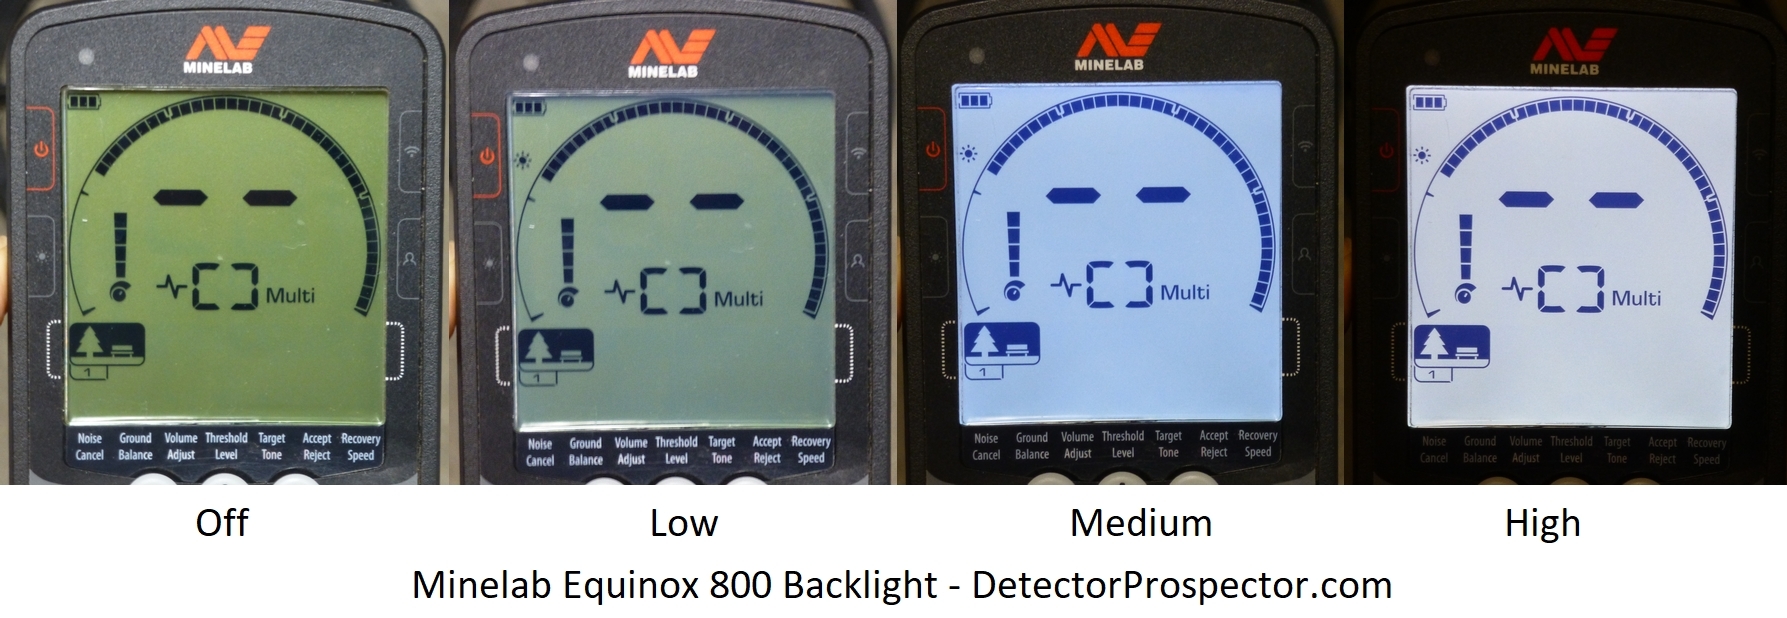 minelab-equinox-800-backlight-settings-compared.jpg